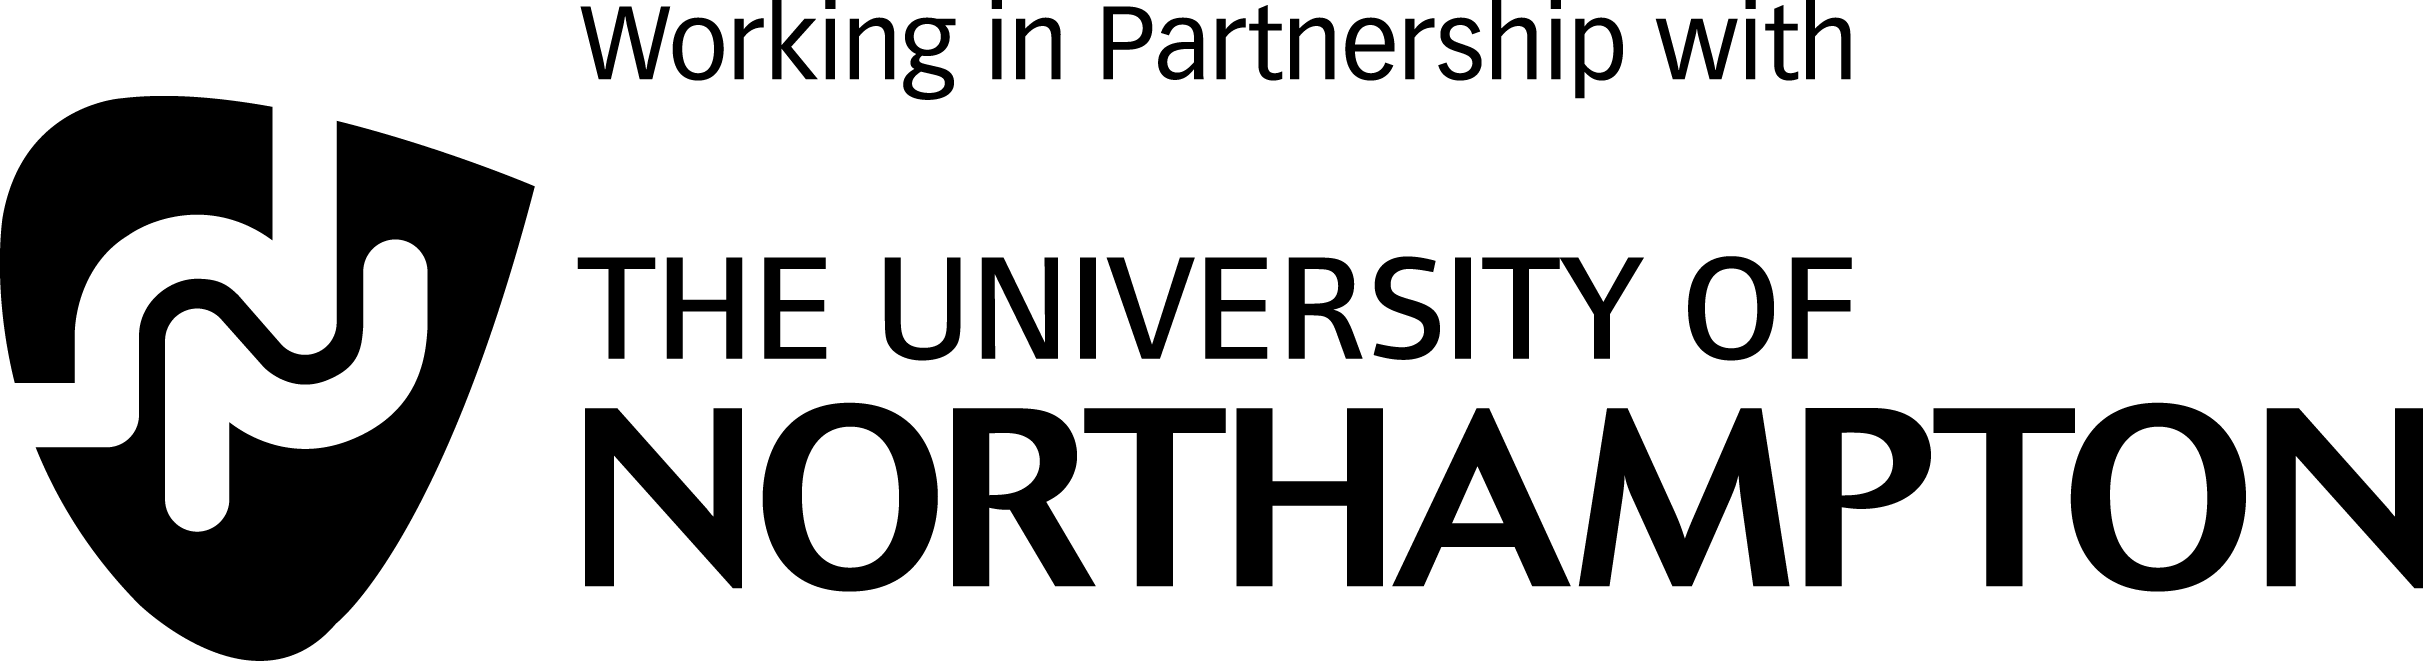 northampton-logo